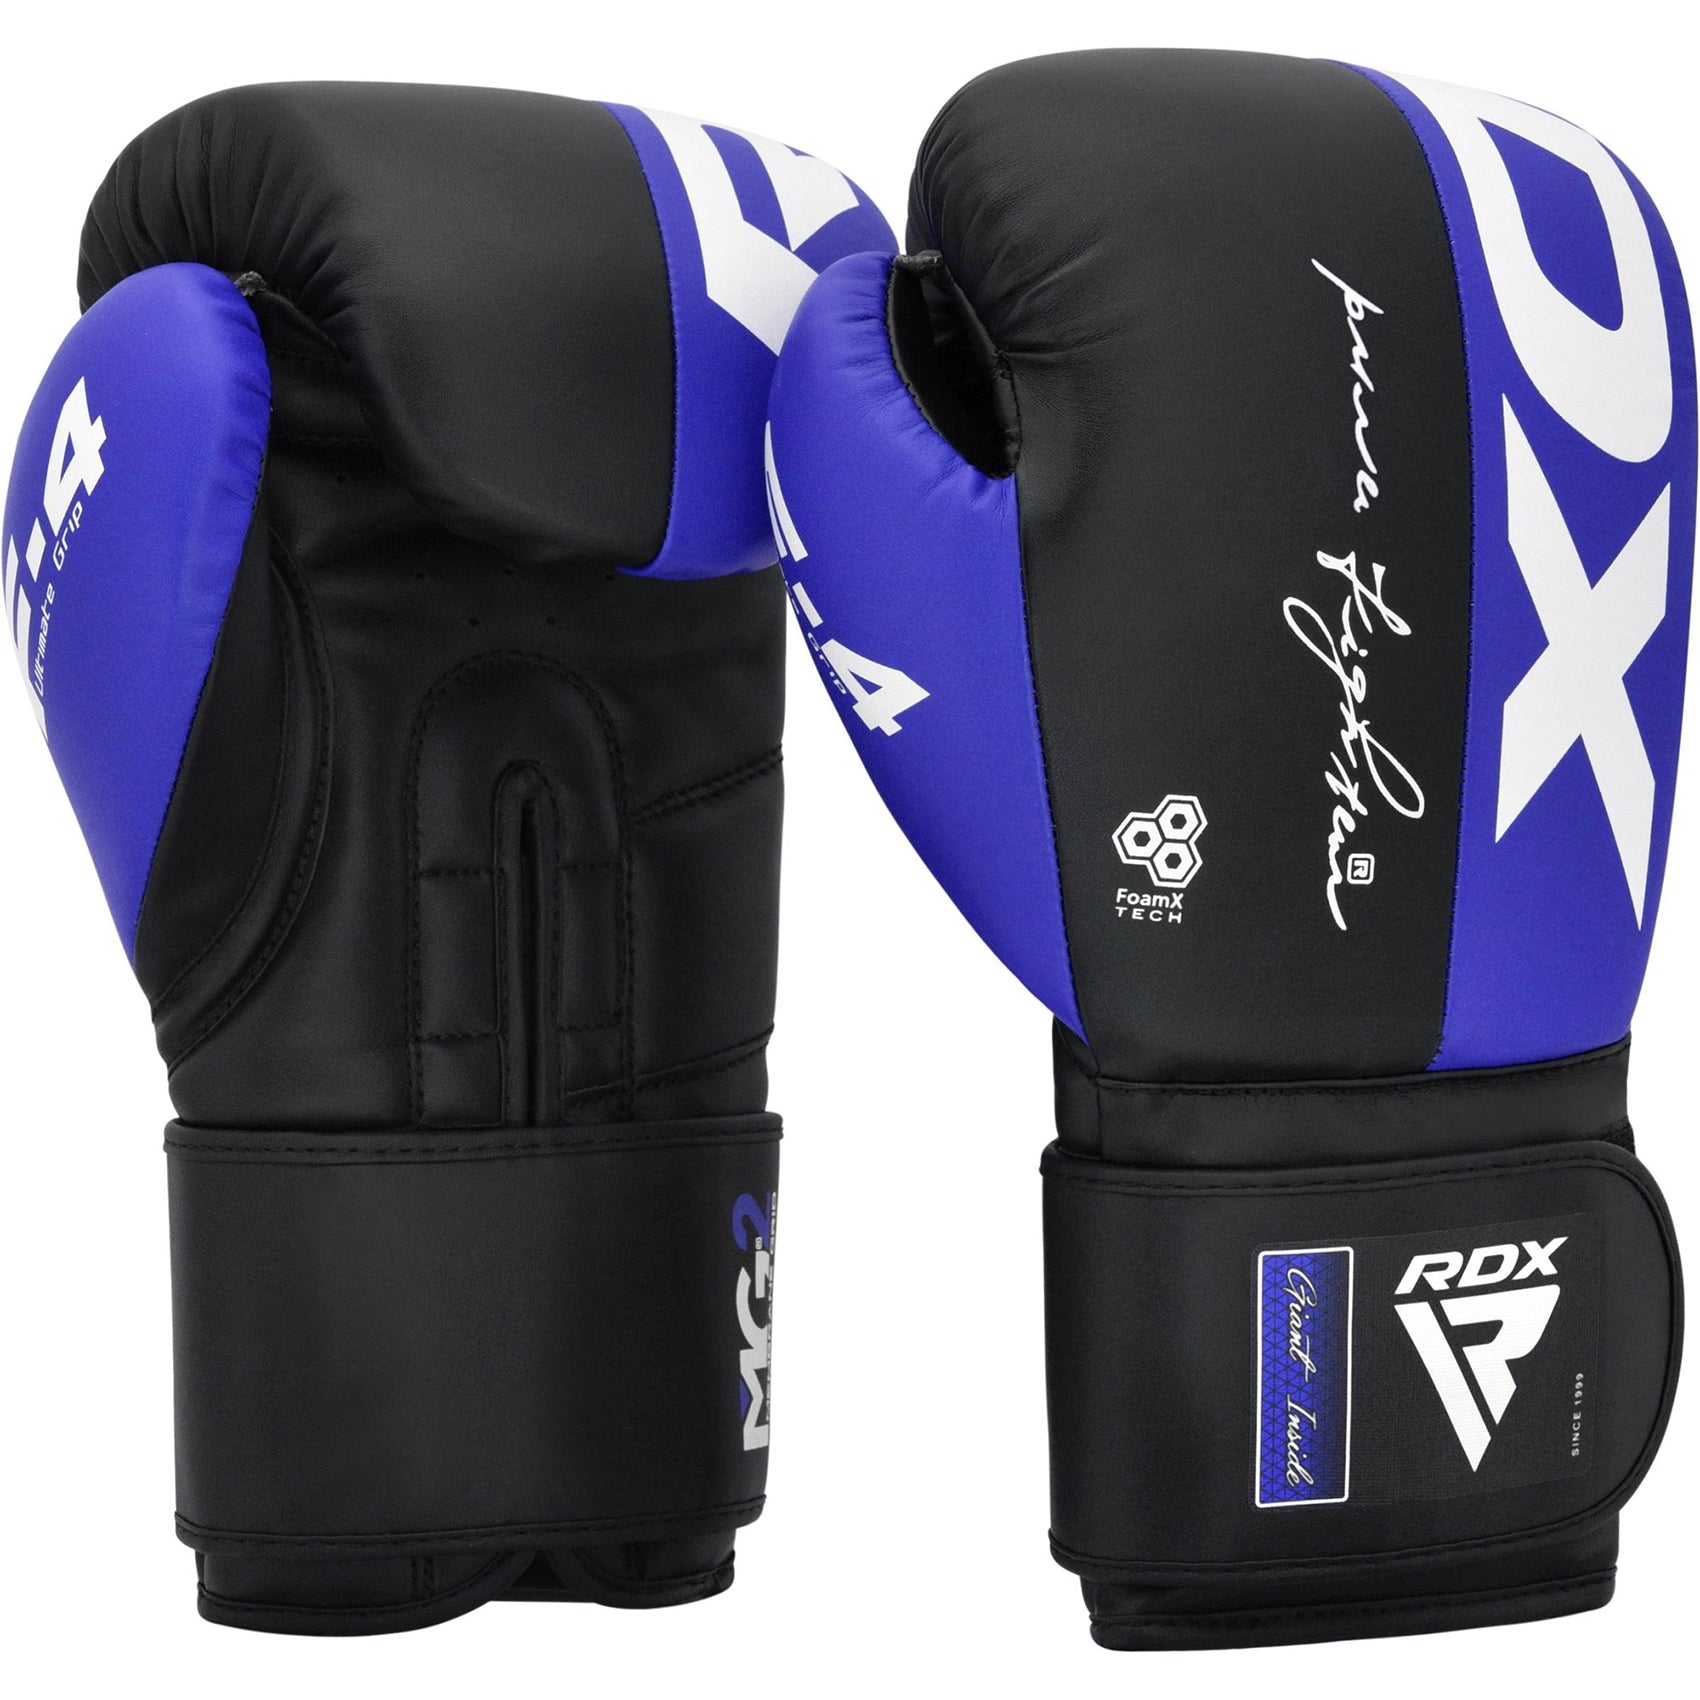 RDX REX F4 MMA, BJJ, Muay Thai, Kickboxing, Training Boxing Gloves - BLUE/BLACK - 14oz - Pro-Distributing